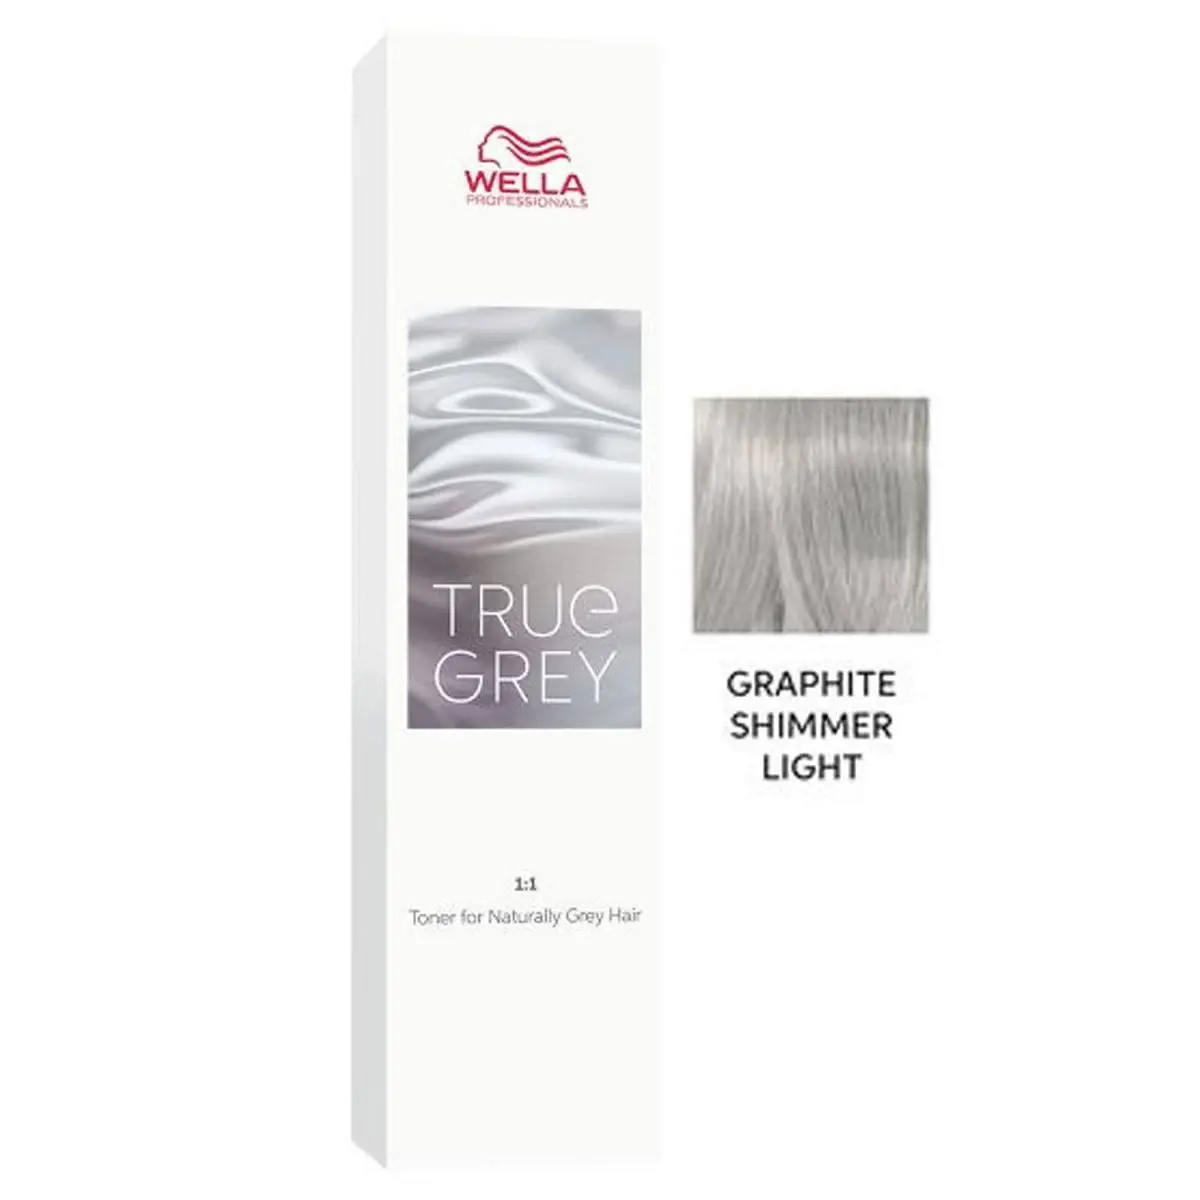 Wella True Grey - 60 ml Graphite Shimmer Light